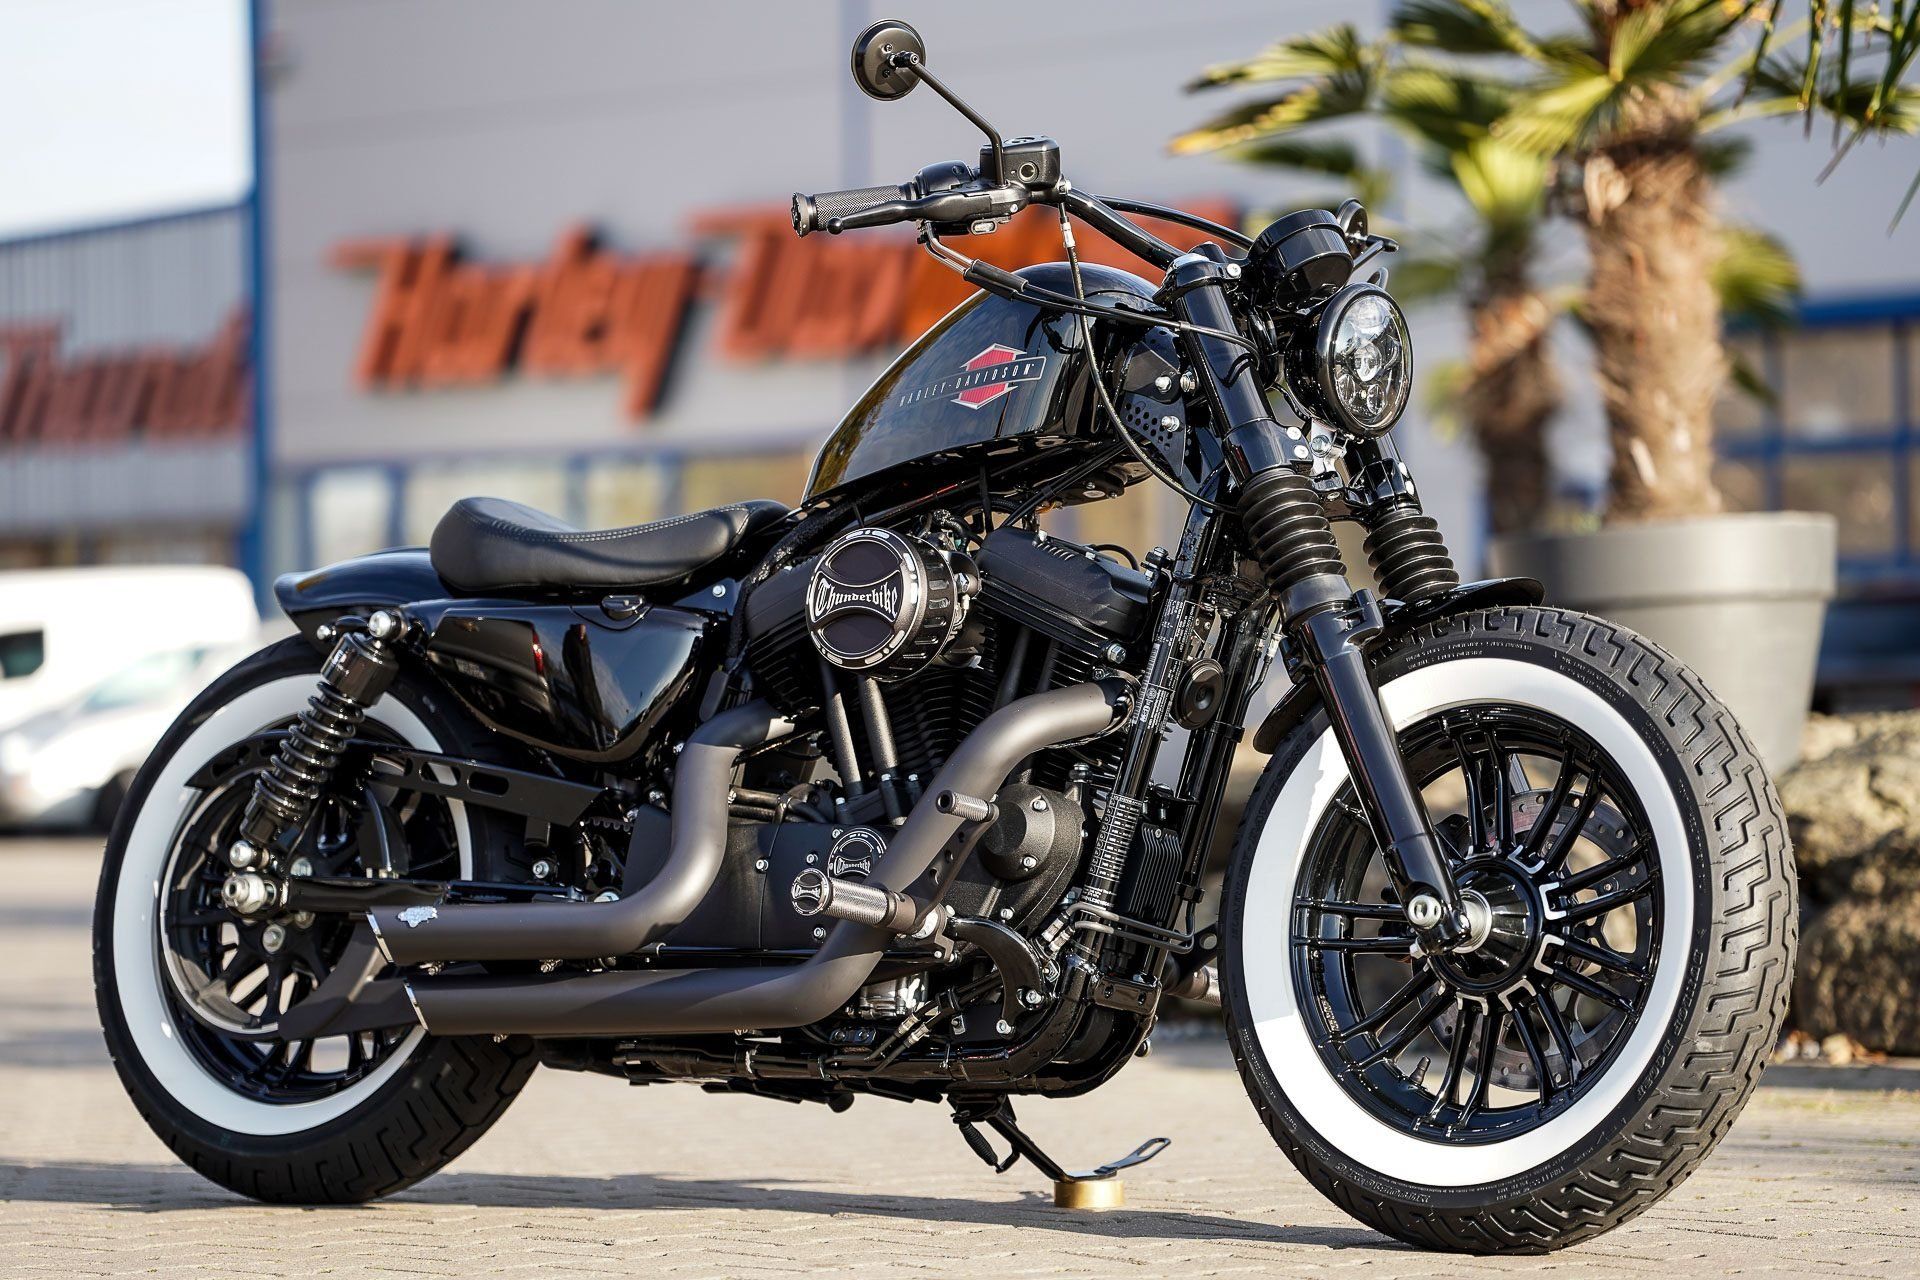 Harley Davidson Sportster Wallpapers, HD Harley Davidson Sportster  Backgrounds, Free Images Download